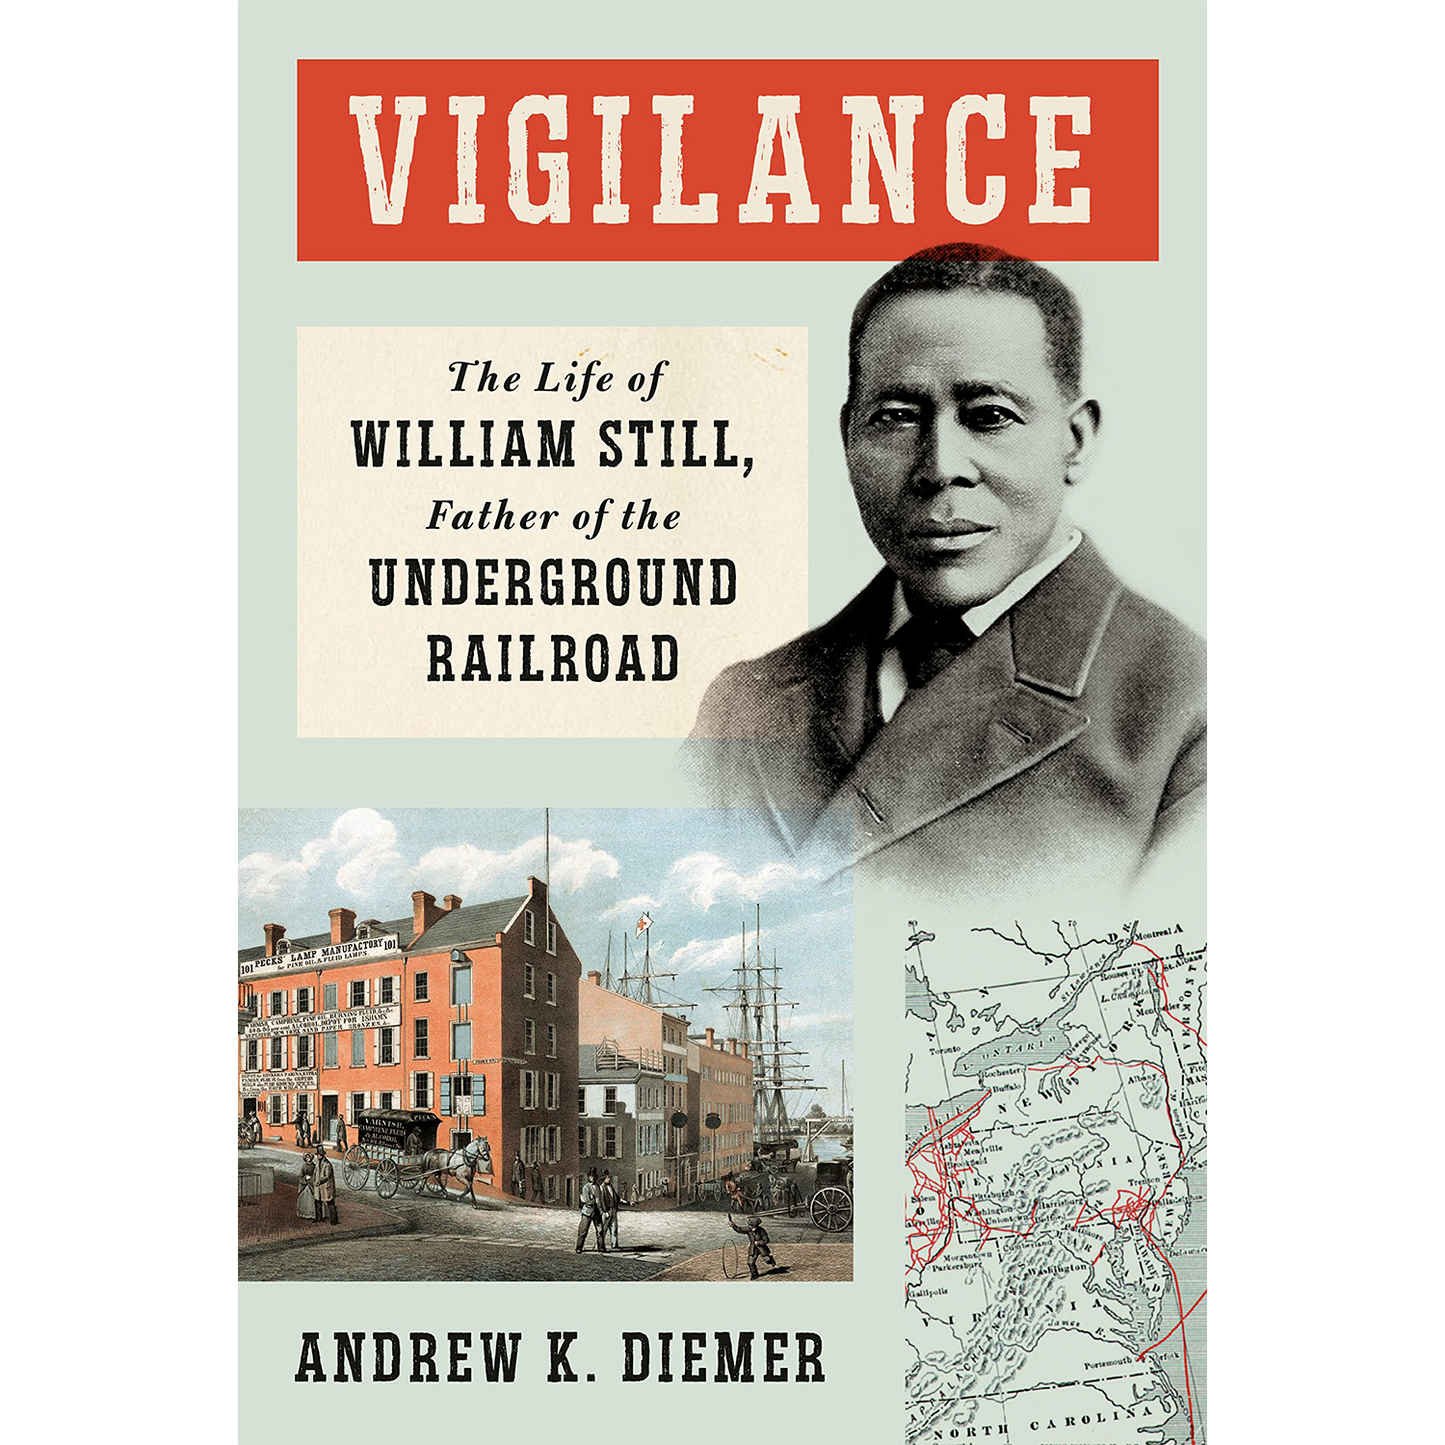 Vigilance: The Life of William Still, Father of the Underground Railroad